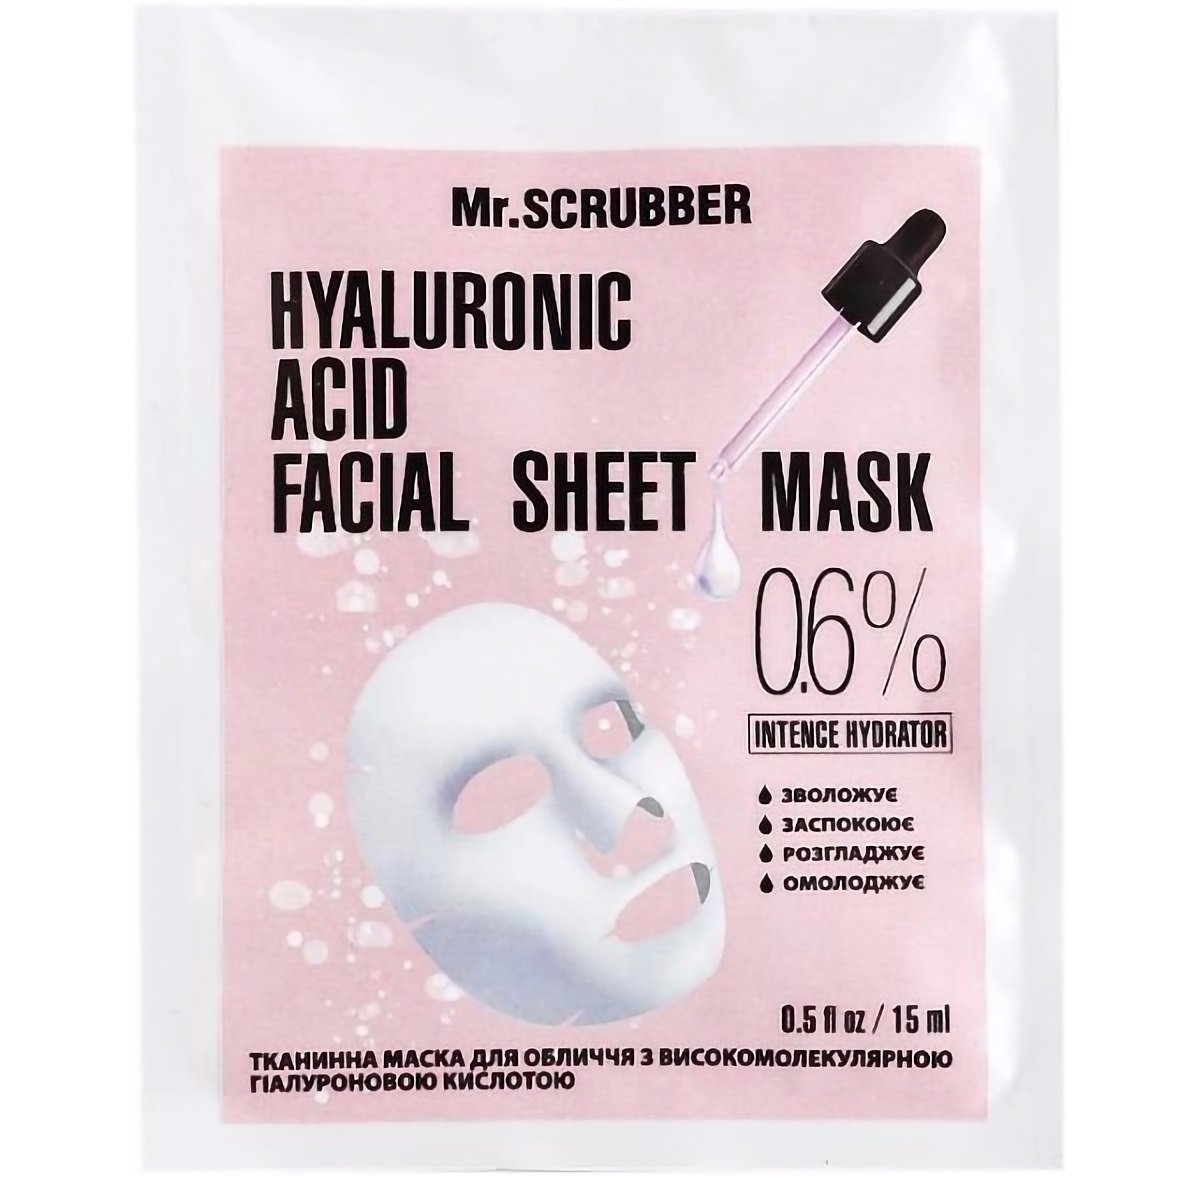 Тканинна маска Mr.Scrubber з високомолекулярною гіалуроновою кислотою Hyaluronic Acid Facial Sheet Mask, 0,6%, 15 мл - фото 1